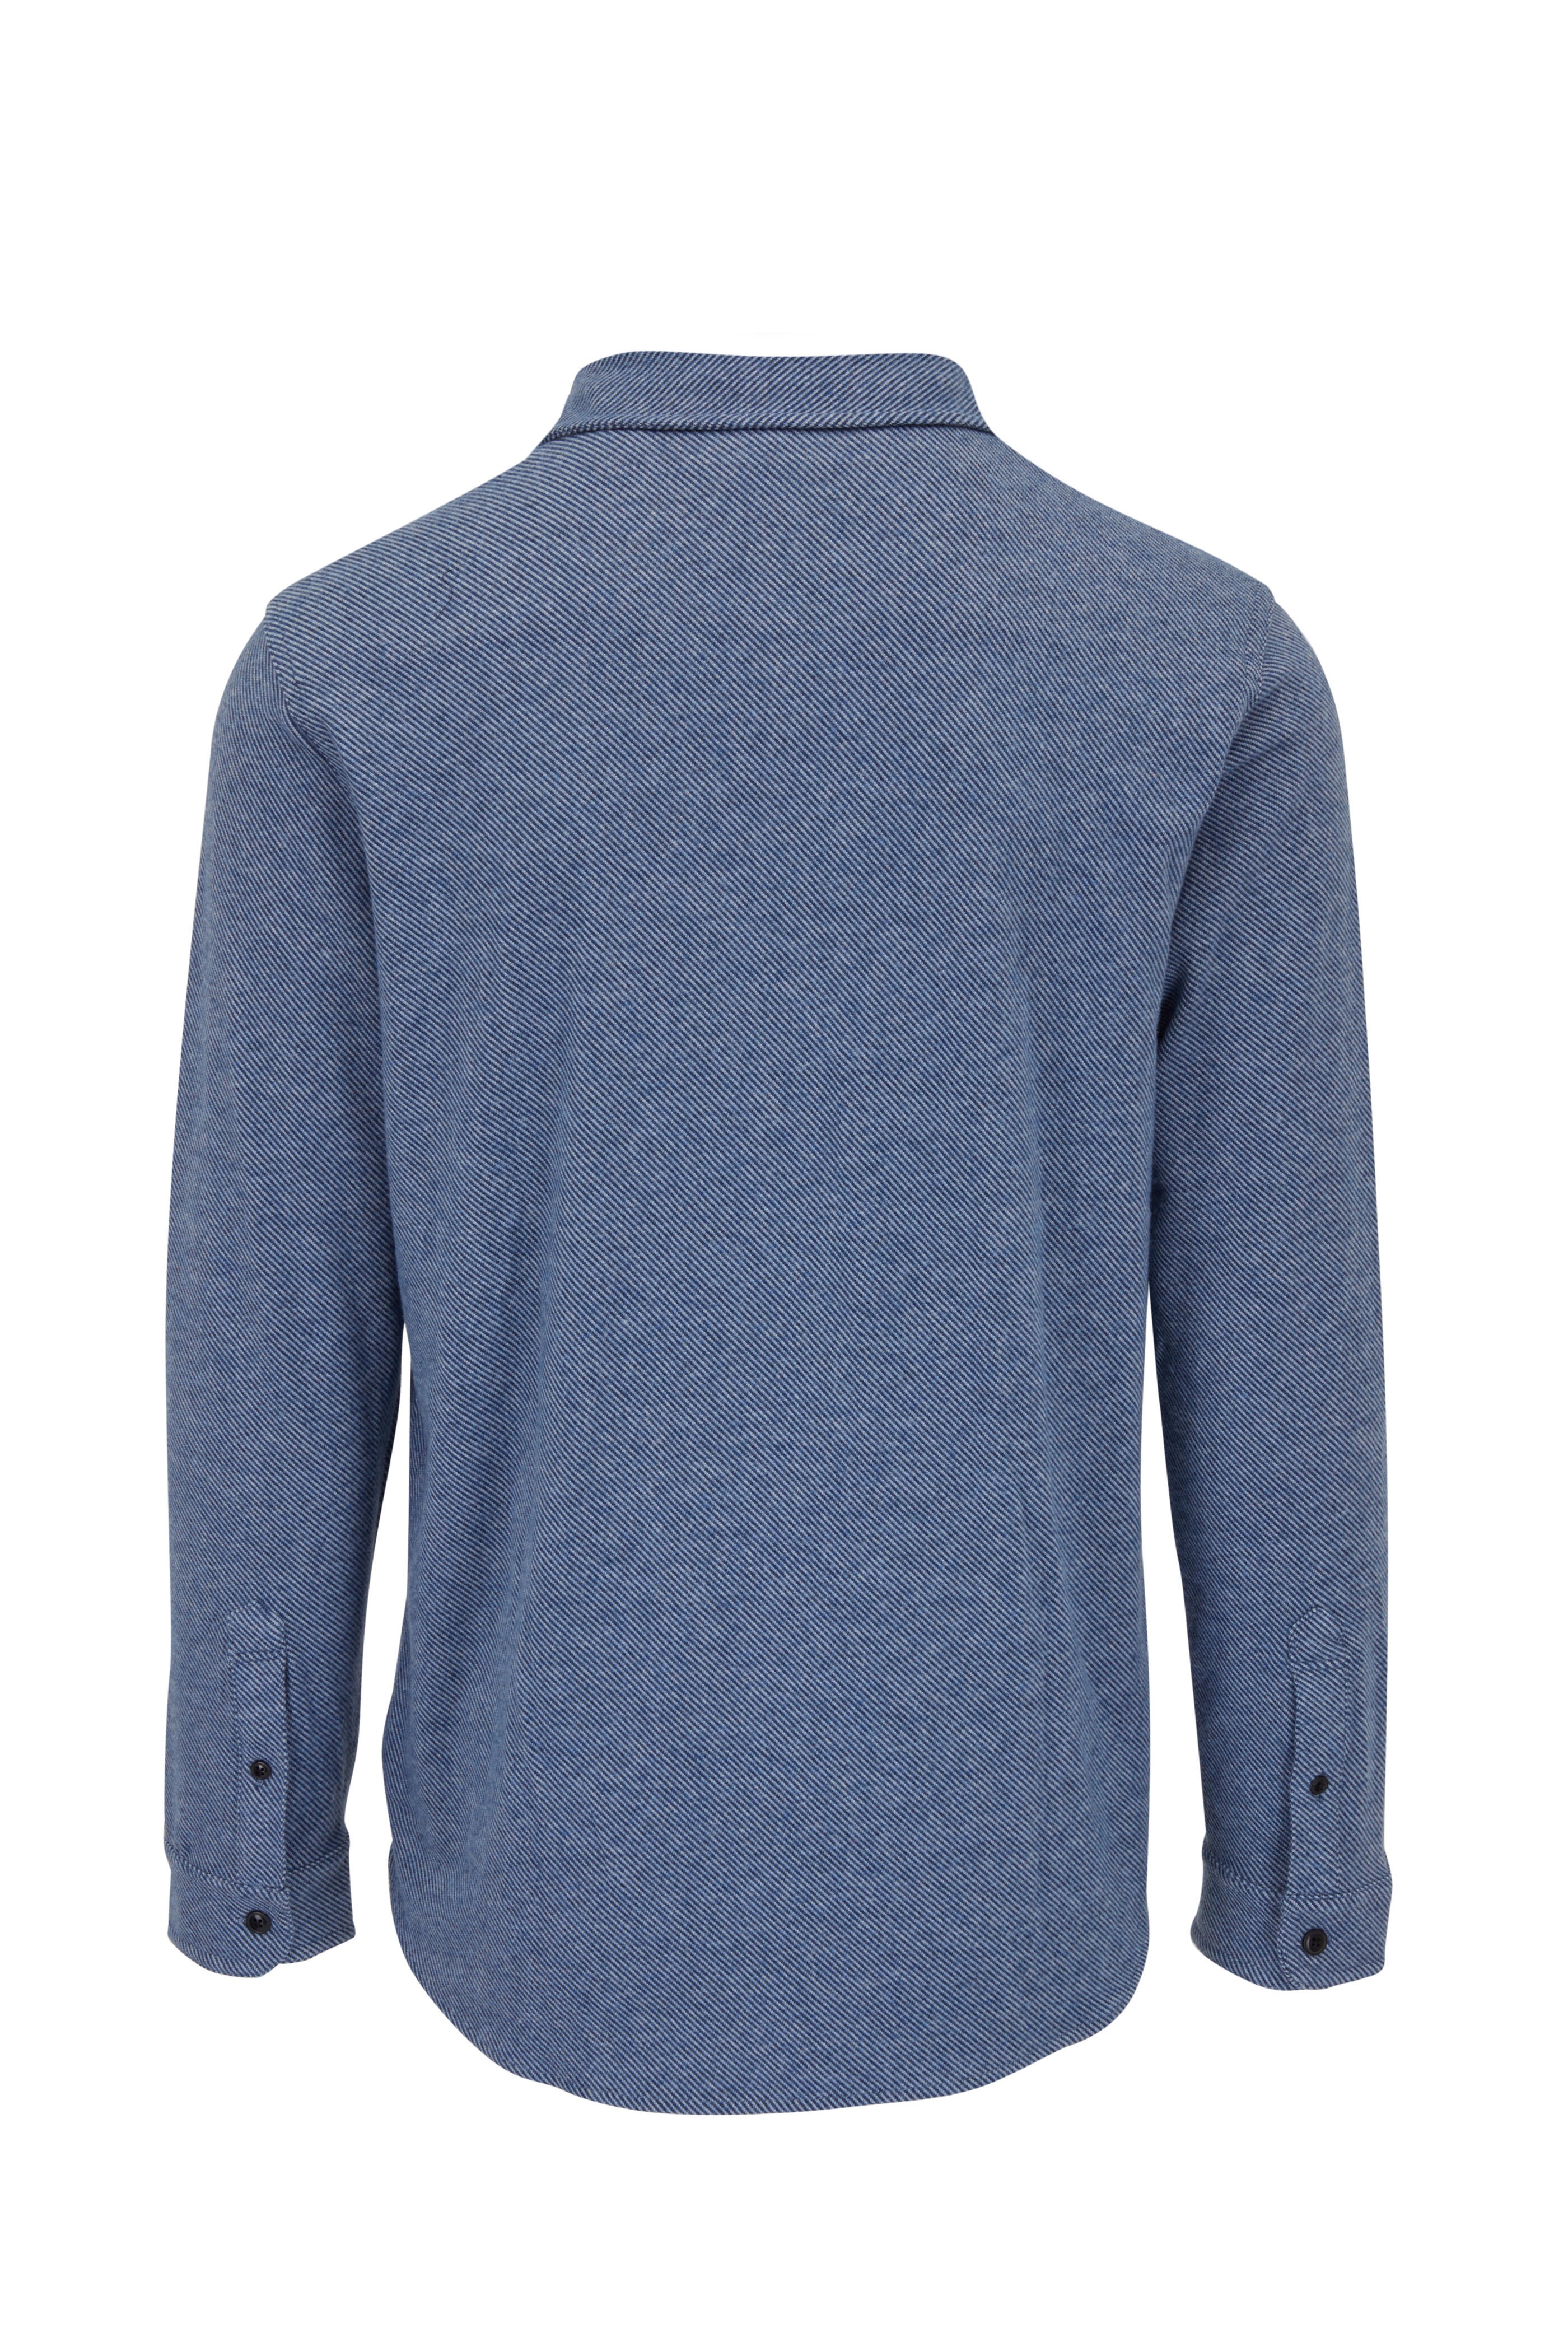 Faherty Legend™ Sweater Shirt: Glacier Blue Twill